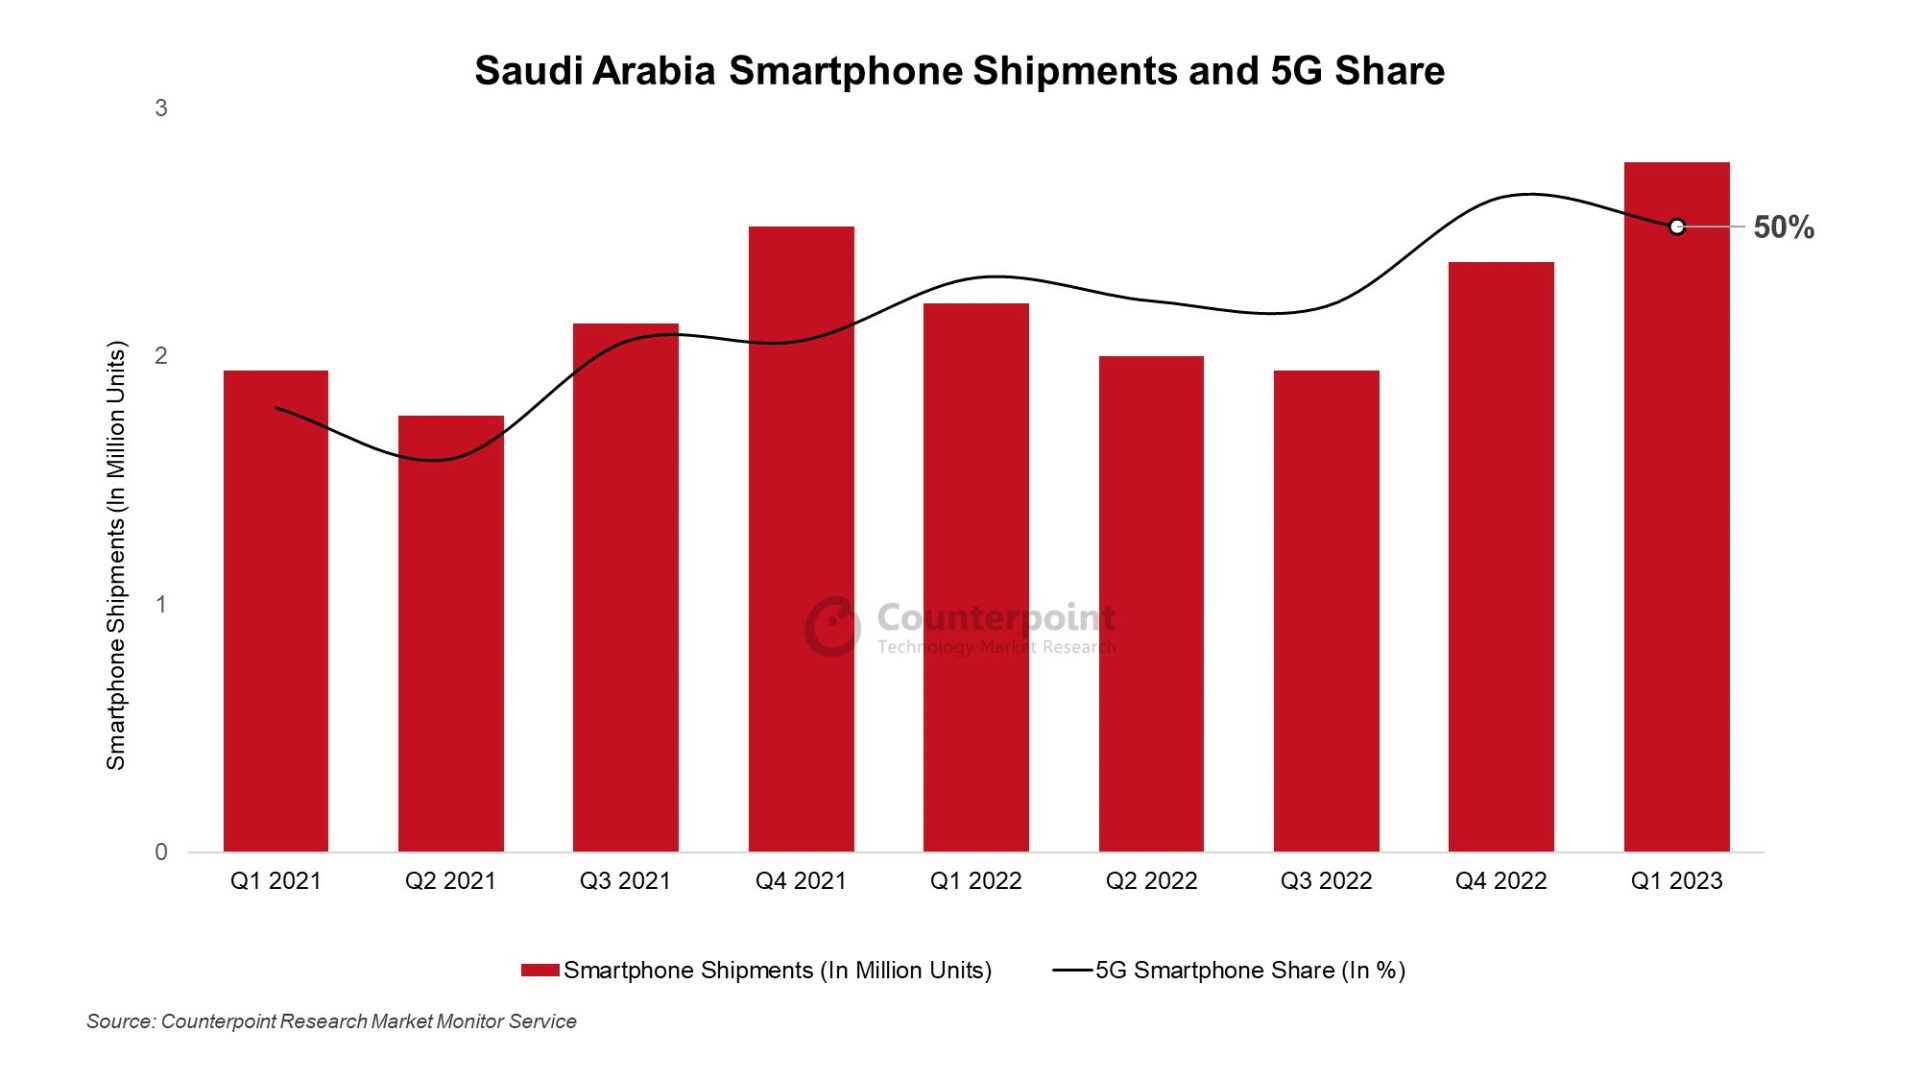 Saudi Arabia Smartphone Shipments & 5G Share